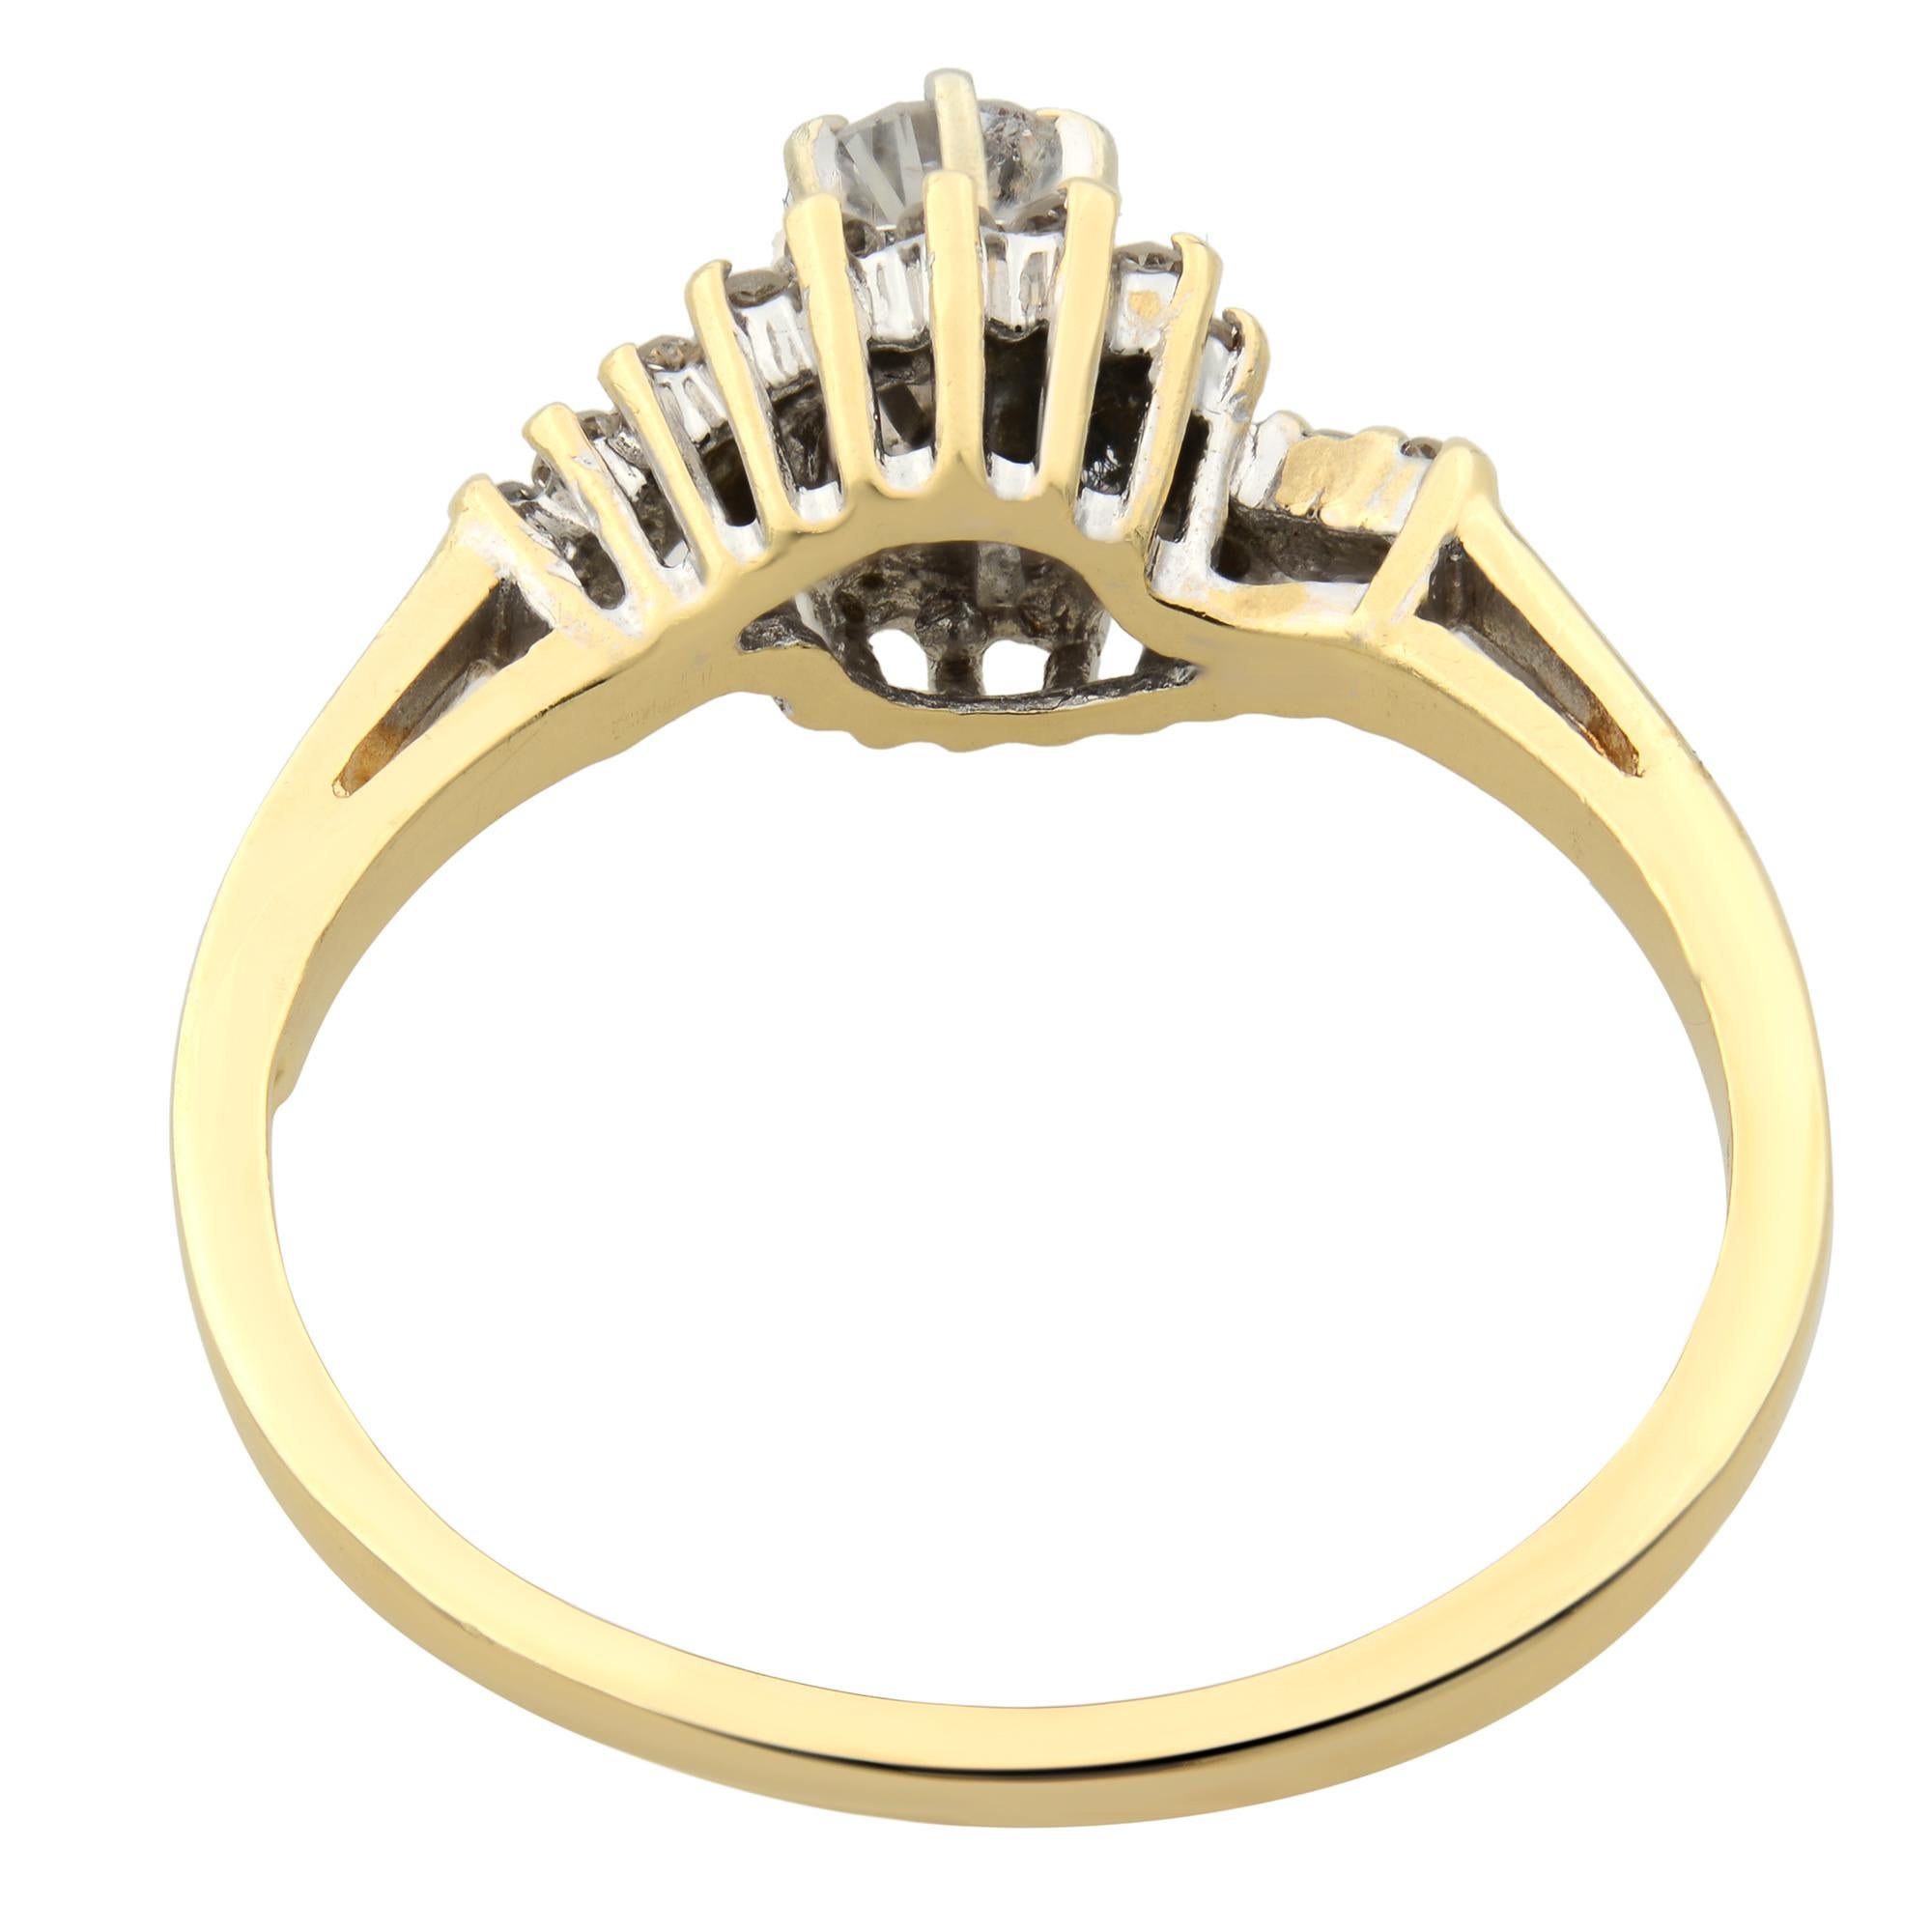 Modern Rachel Koen Ladies Diamond Ring 14K Yellow Gold 0.33cttw For Sale